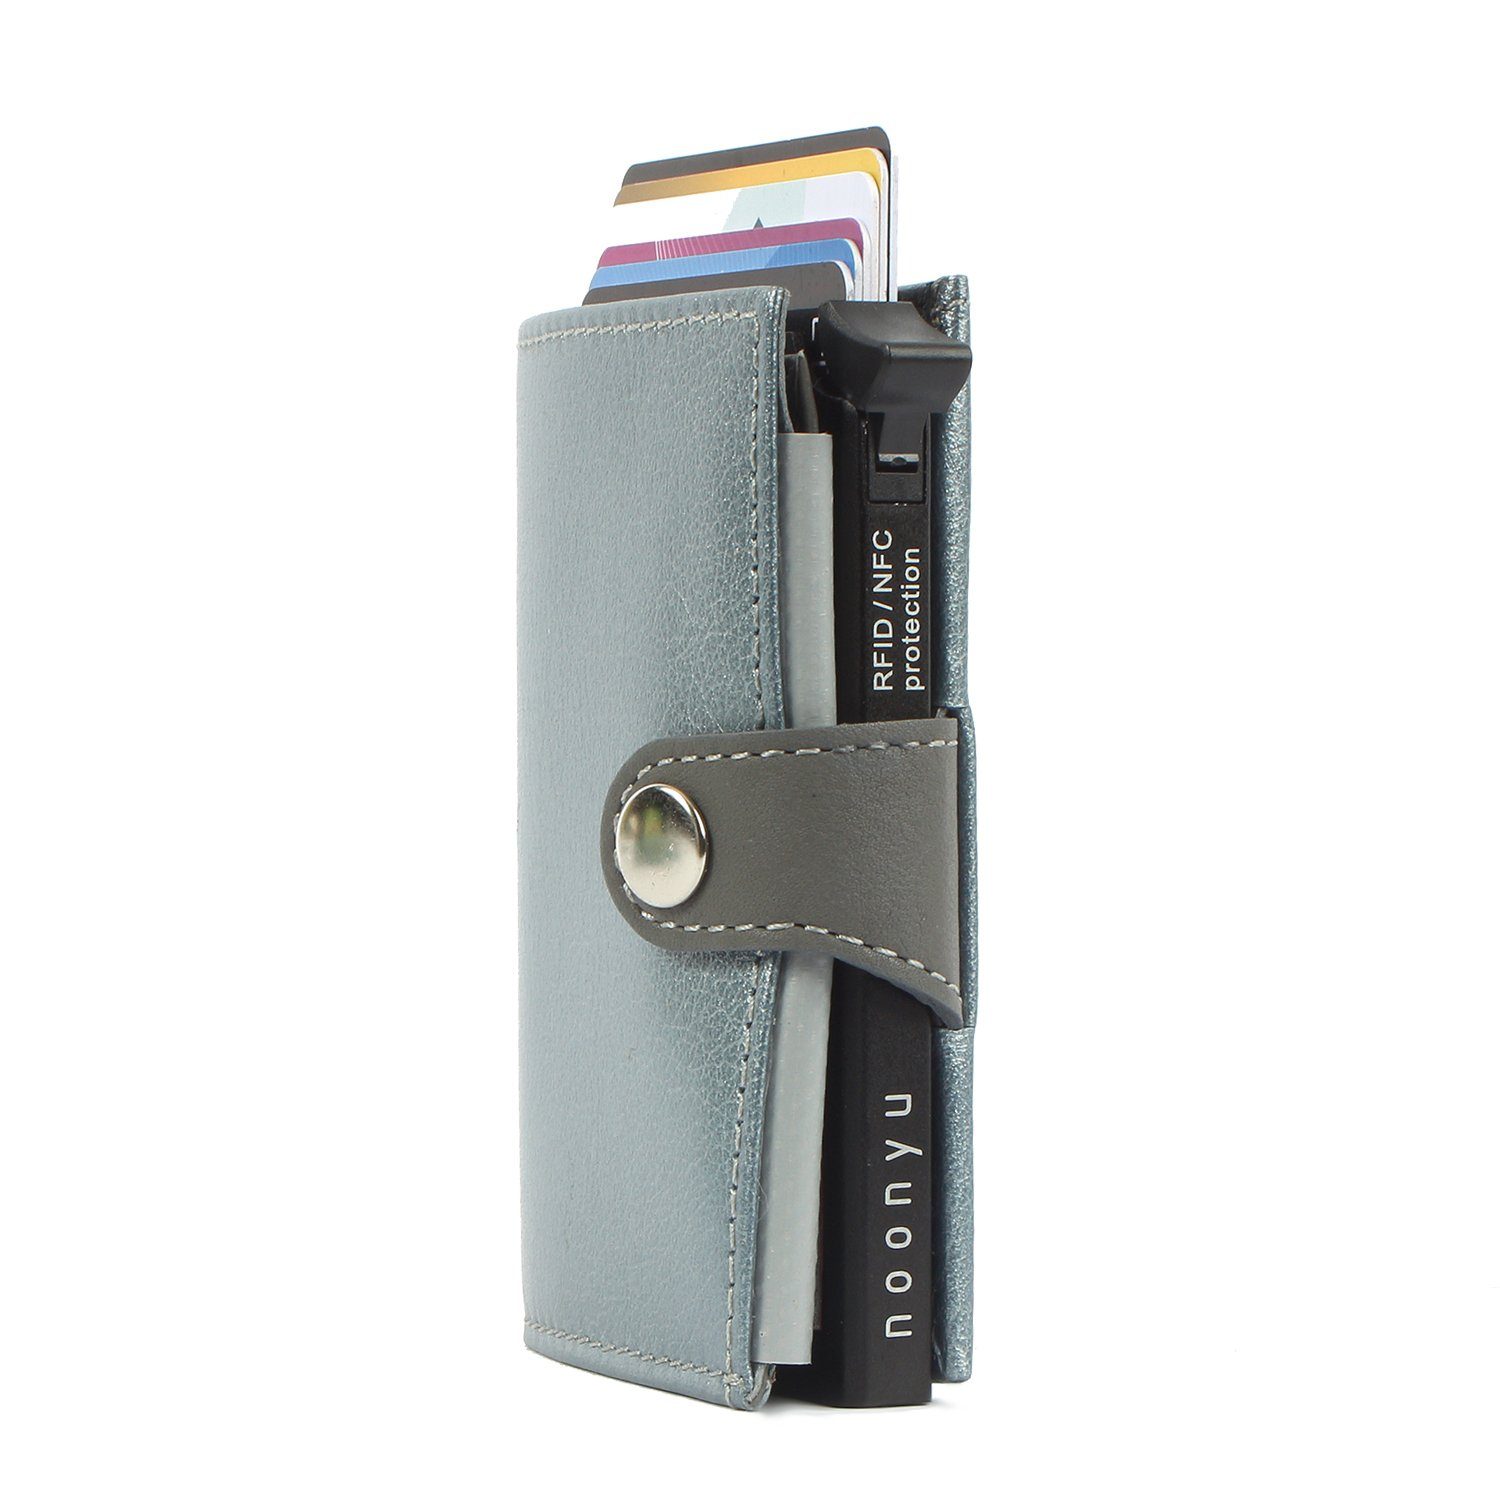 Margelisch Mini Geldbörse noonyu silverblue aus leather, single Leder Kreditkartenbörse Upcycling